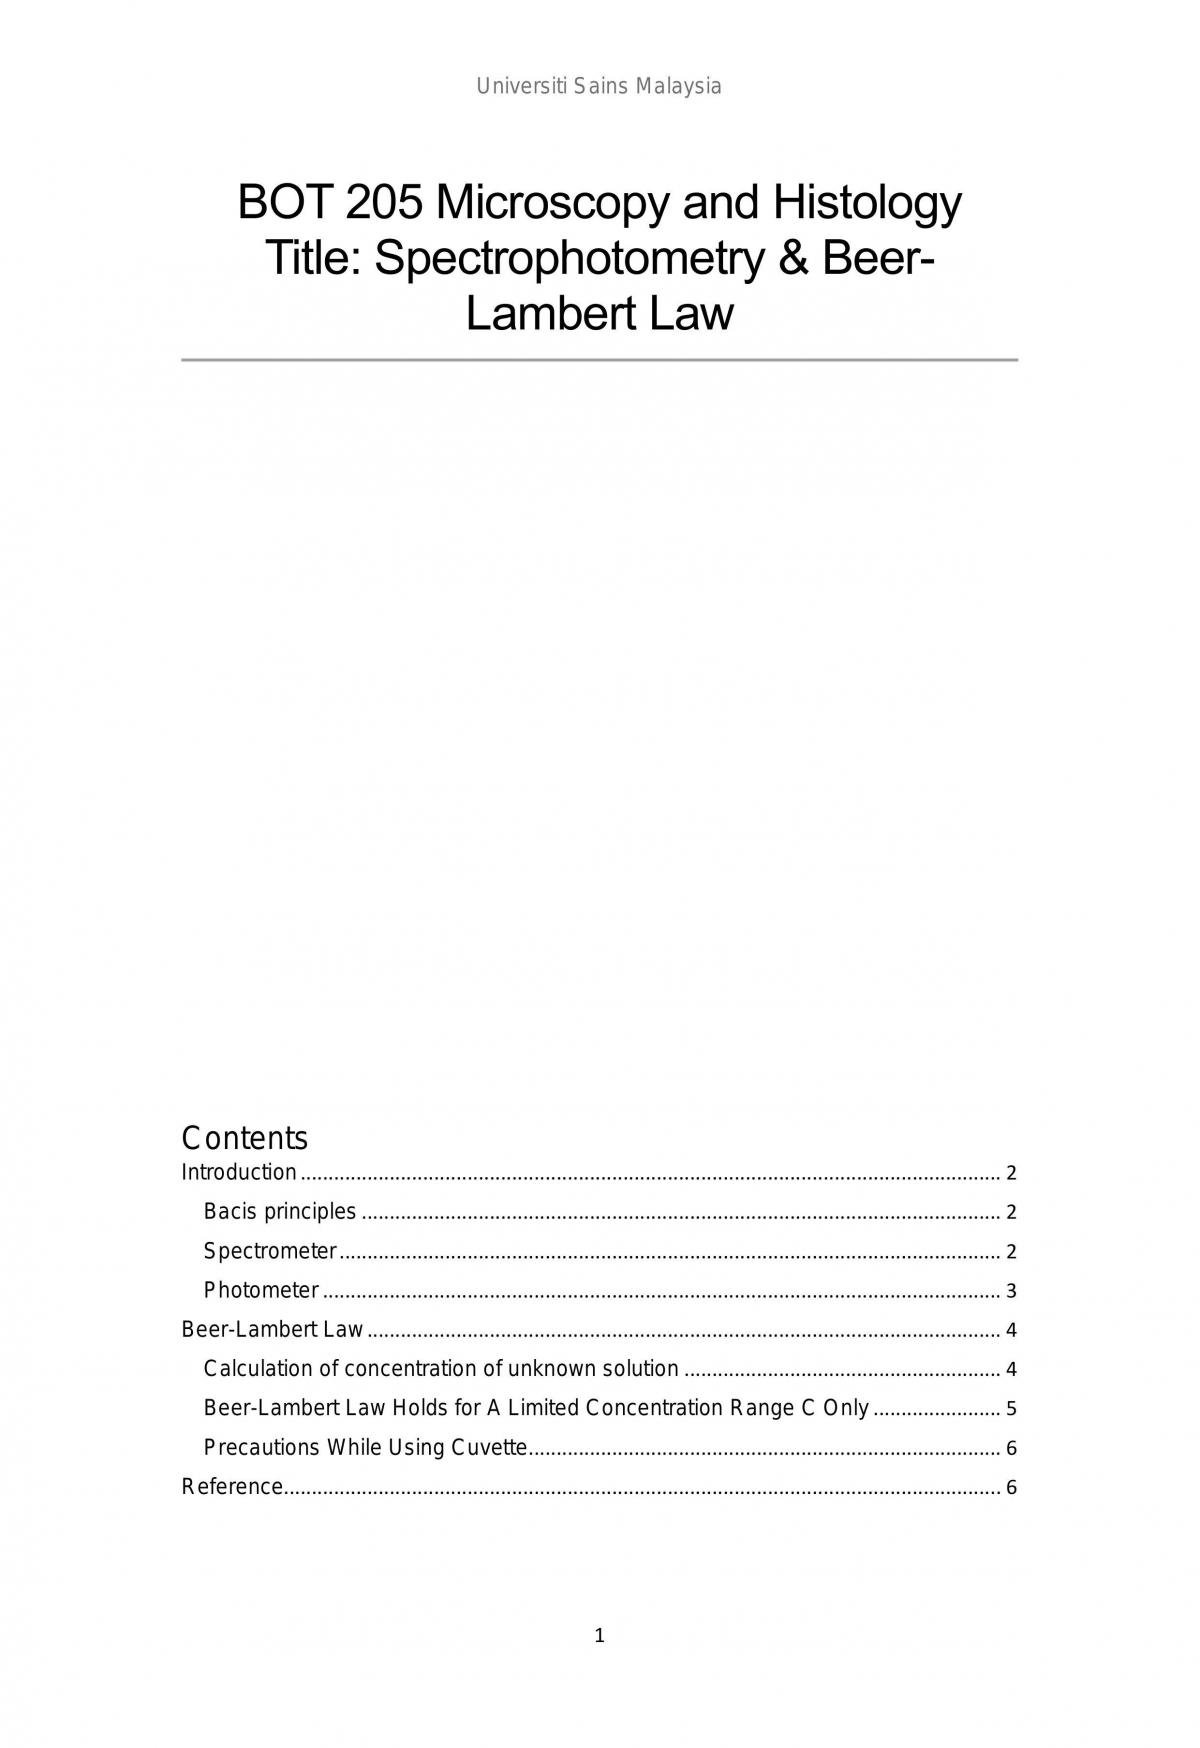 BOT205 Spectrophotometry & Beer-Lambert Law - Page 1